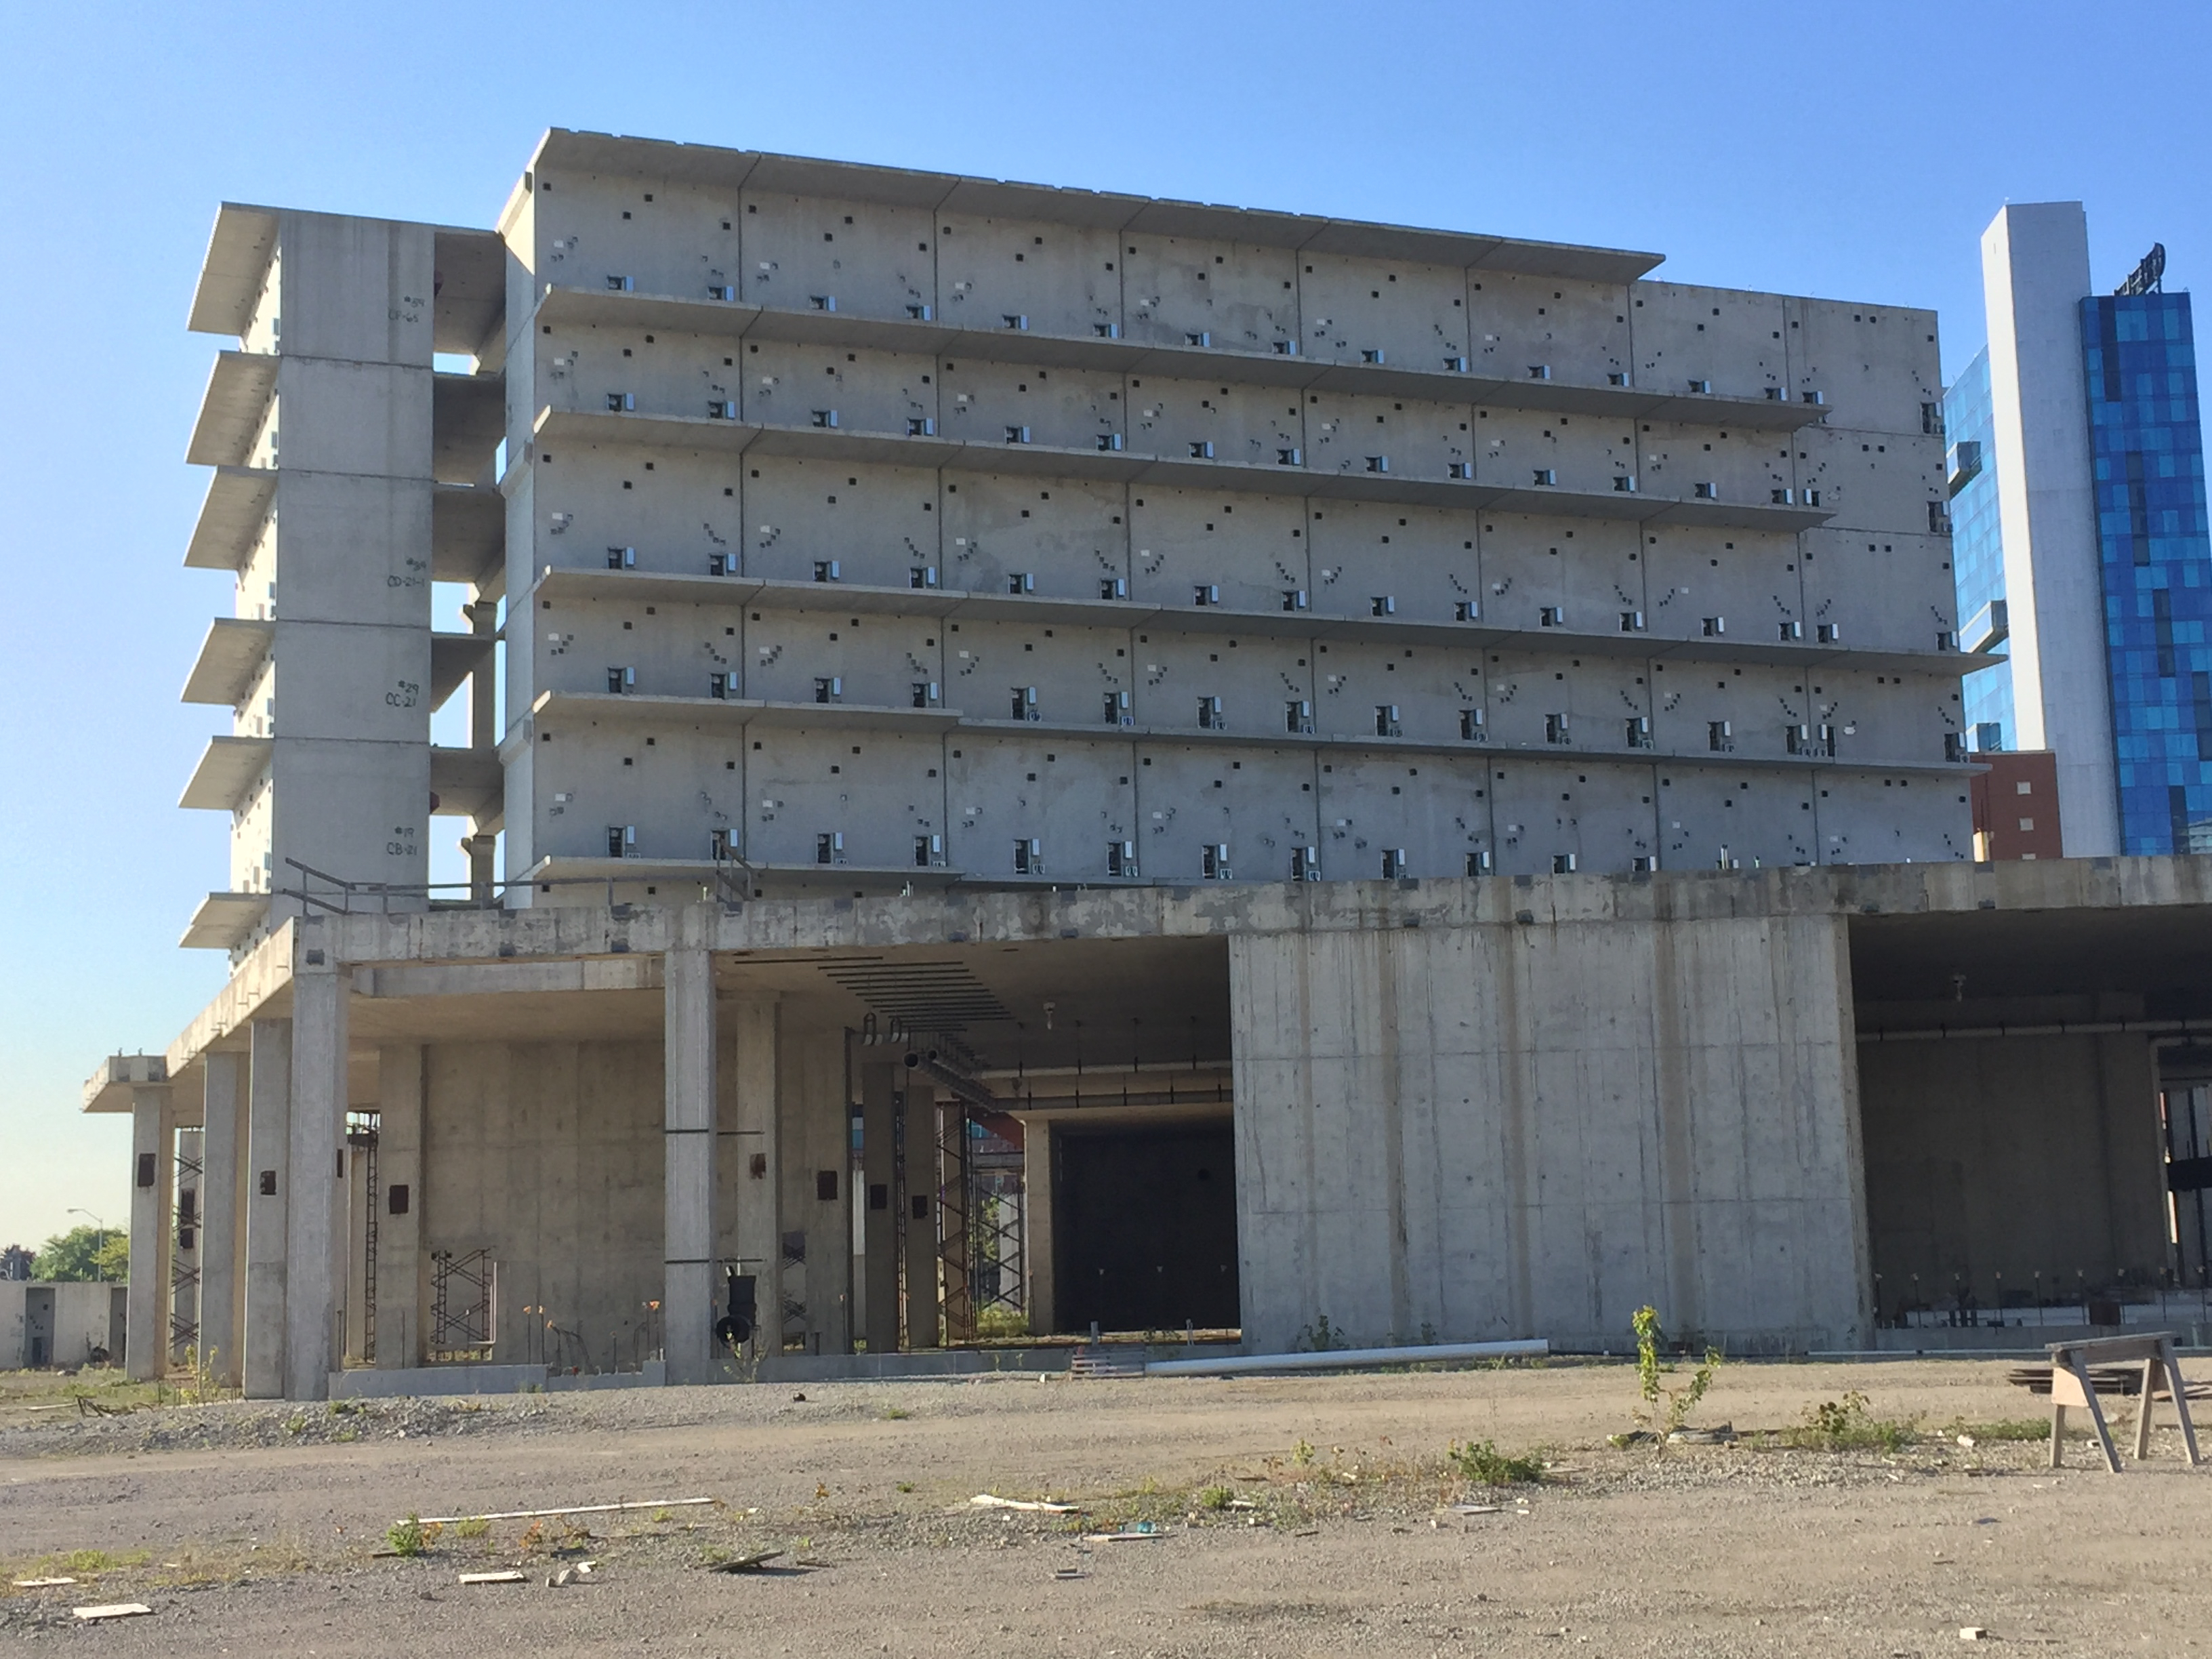 Unfinished Wayne County jail